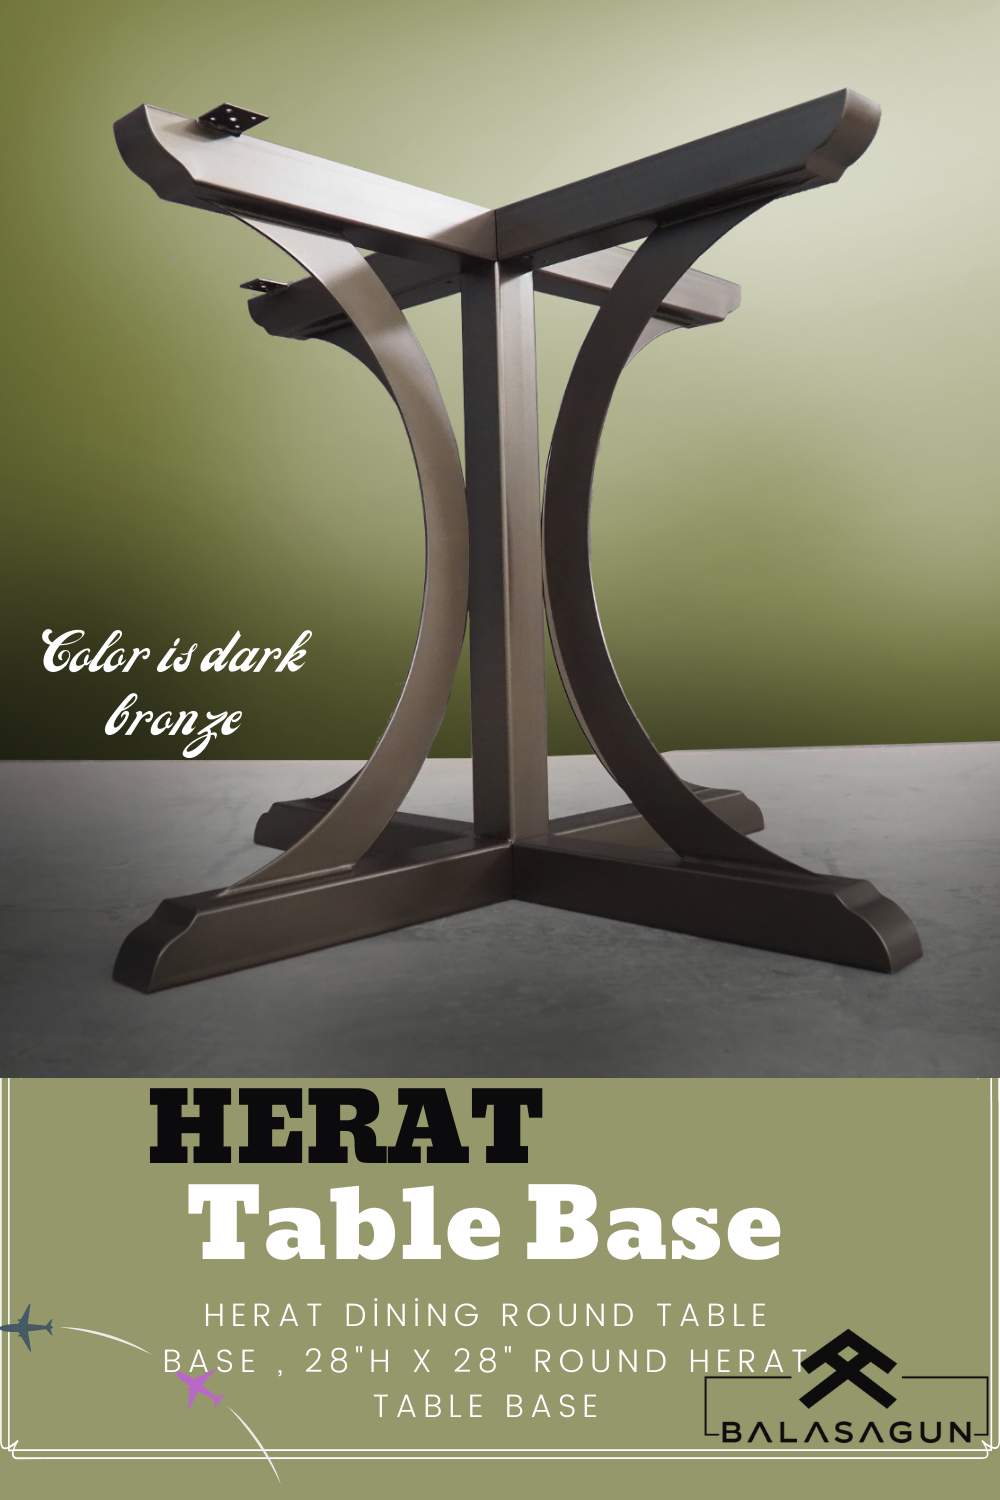 HERAT Dining Round Table Base , 28"H x 28" Round